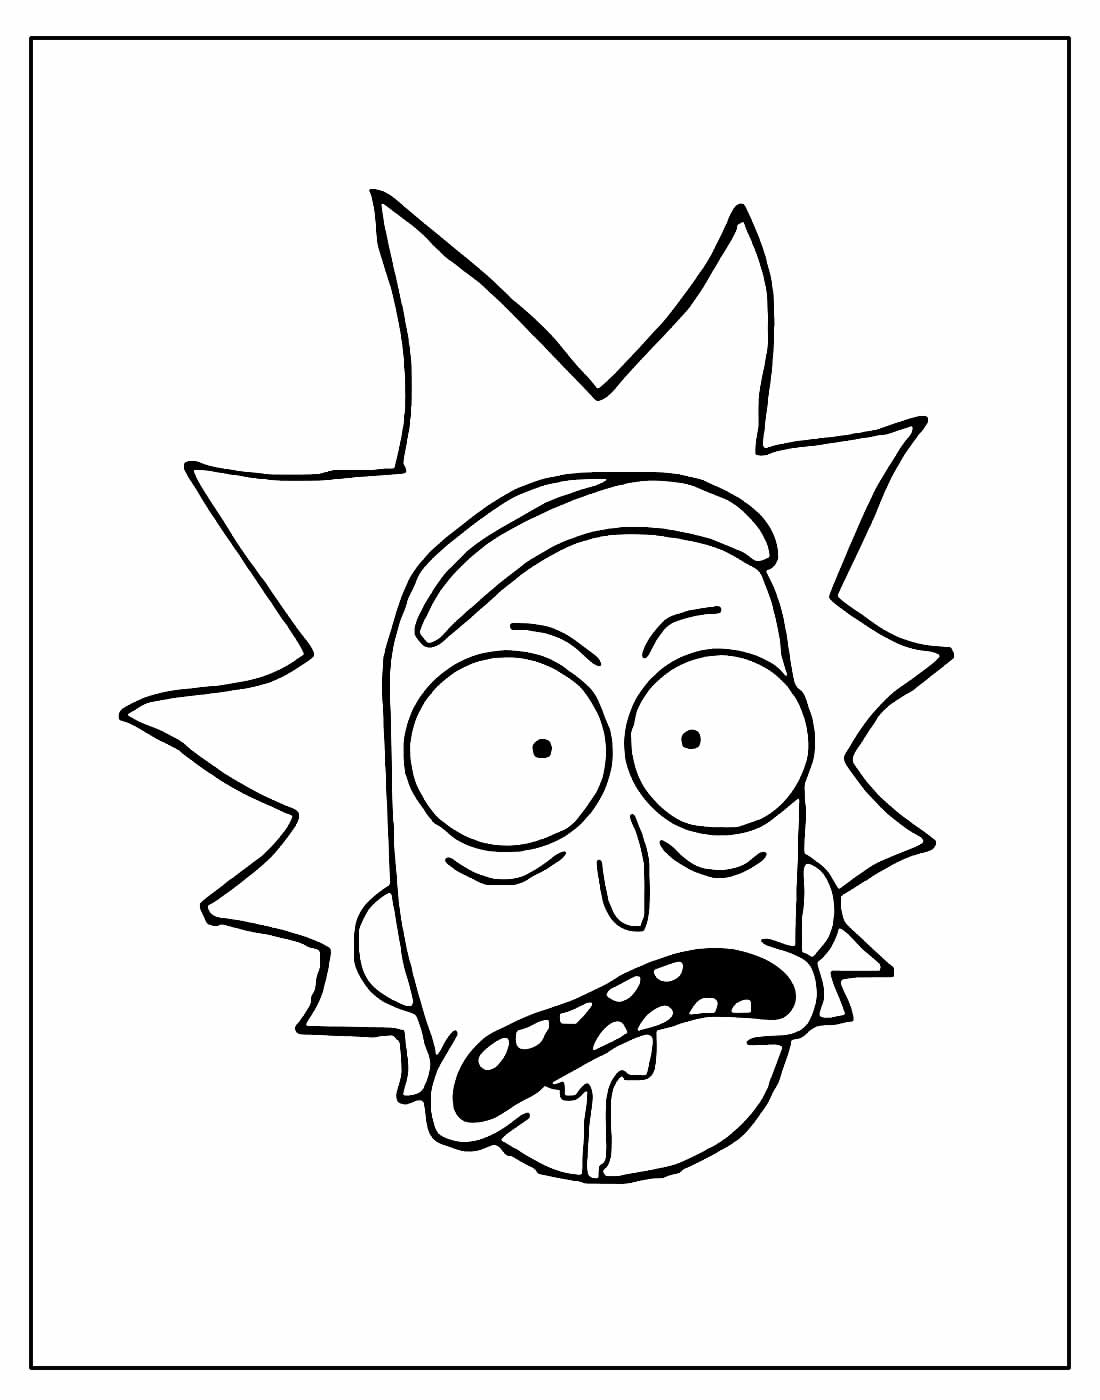 Página para colorir de Rick e Morty